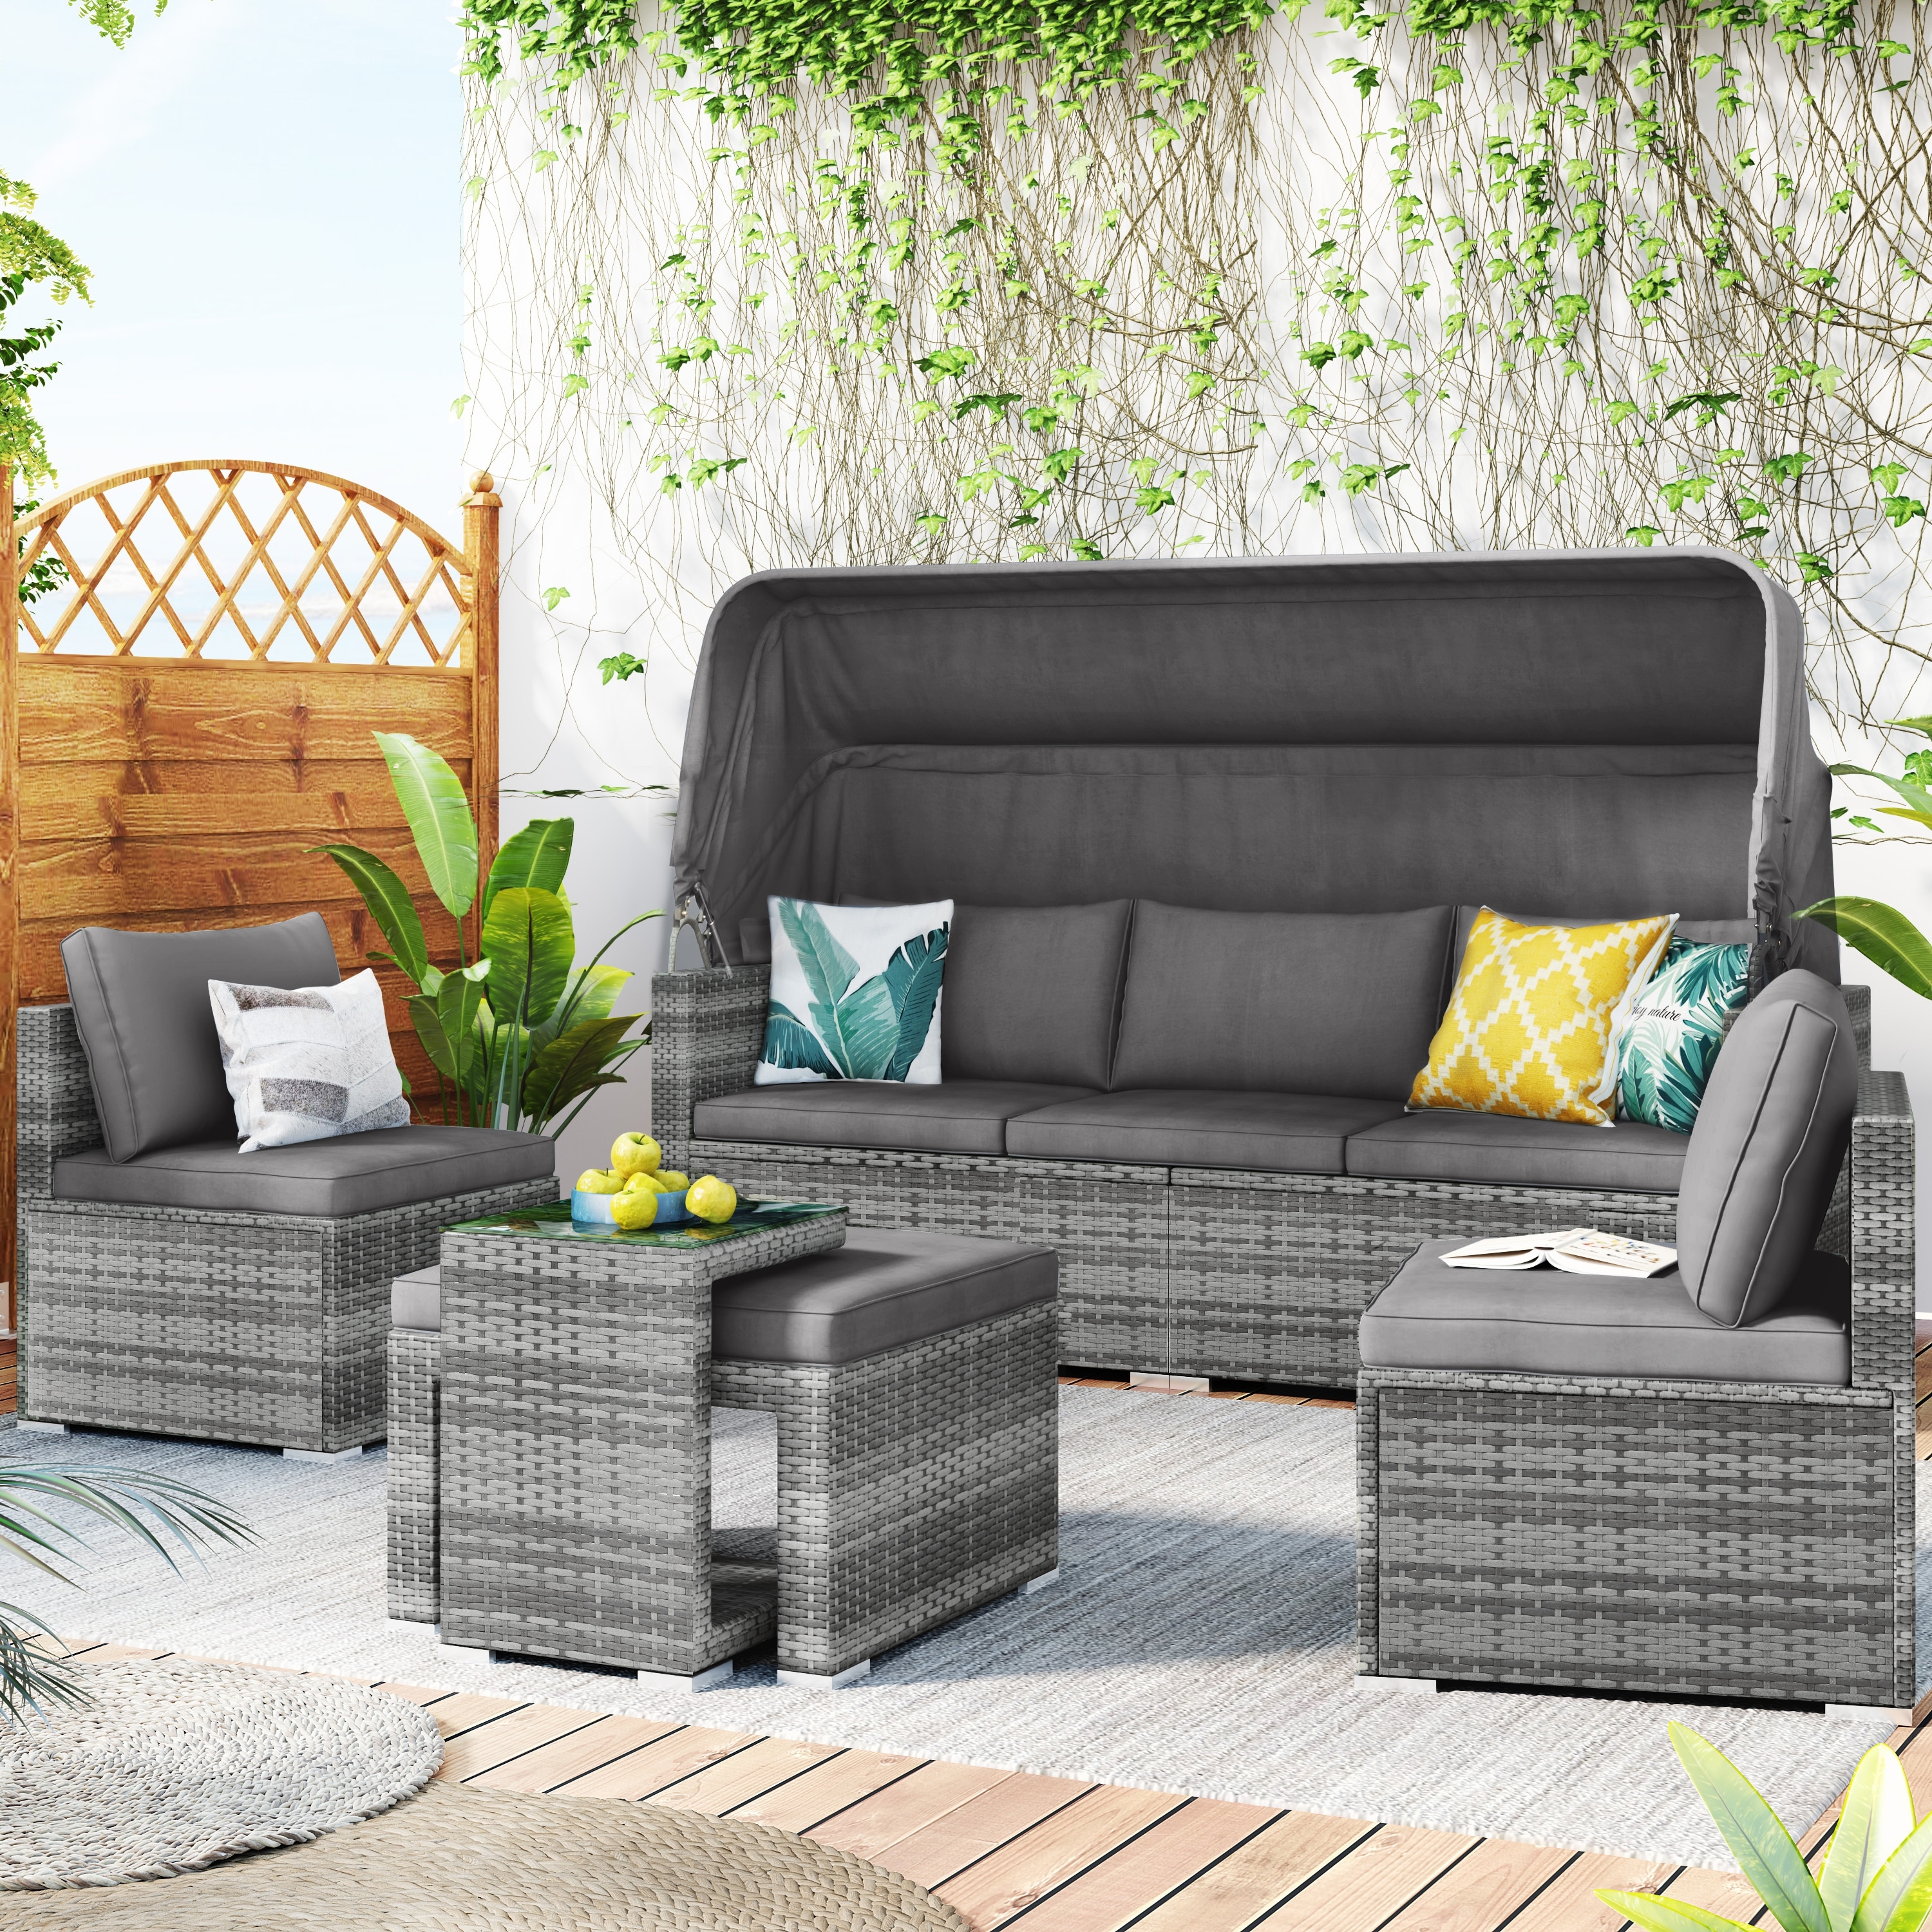 5 Pieces Outdoor Sectional Patio Rattan Sofa Set